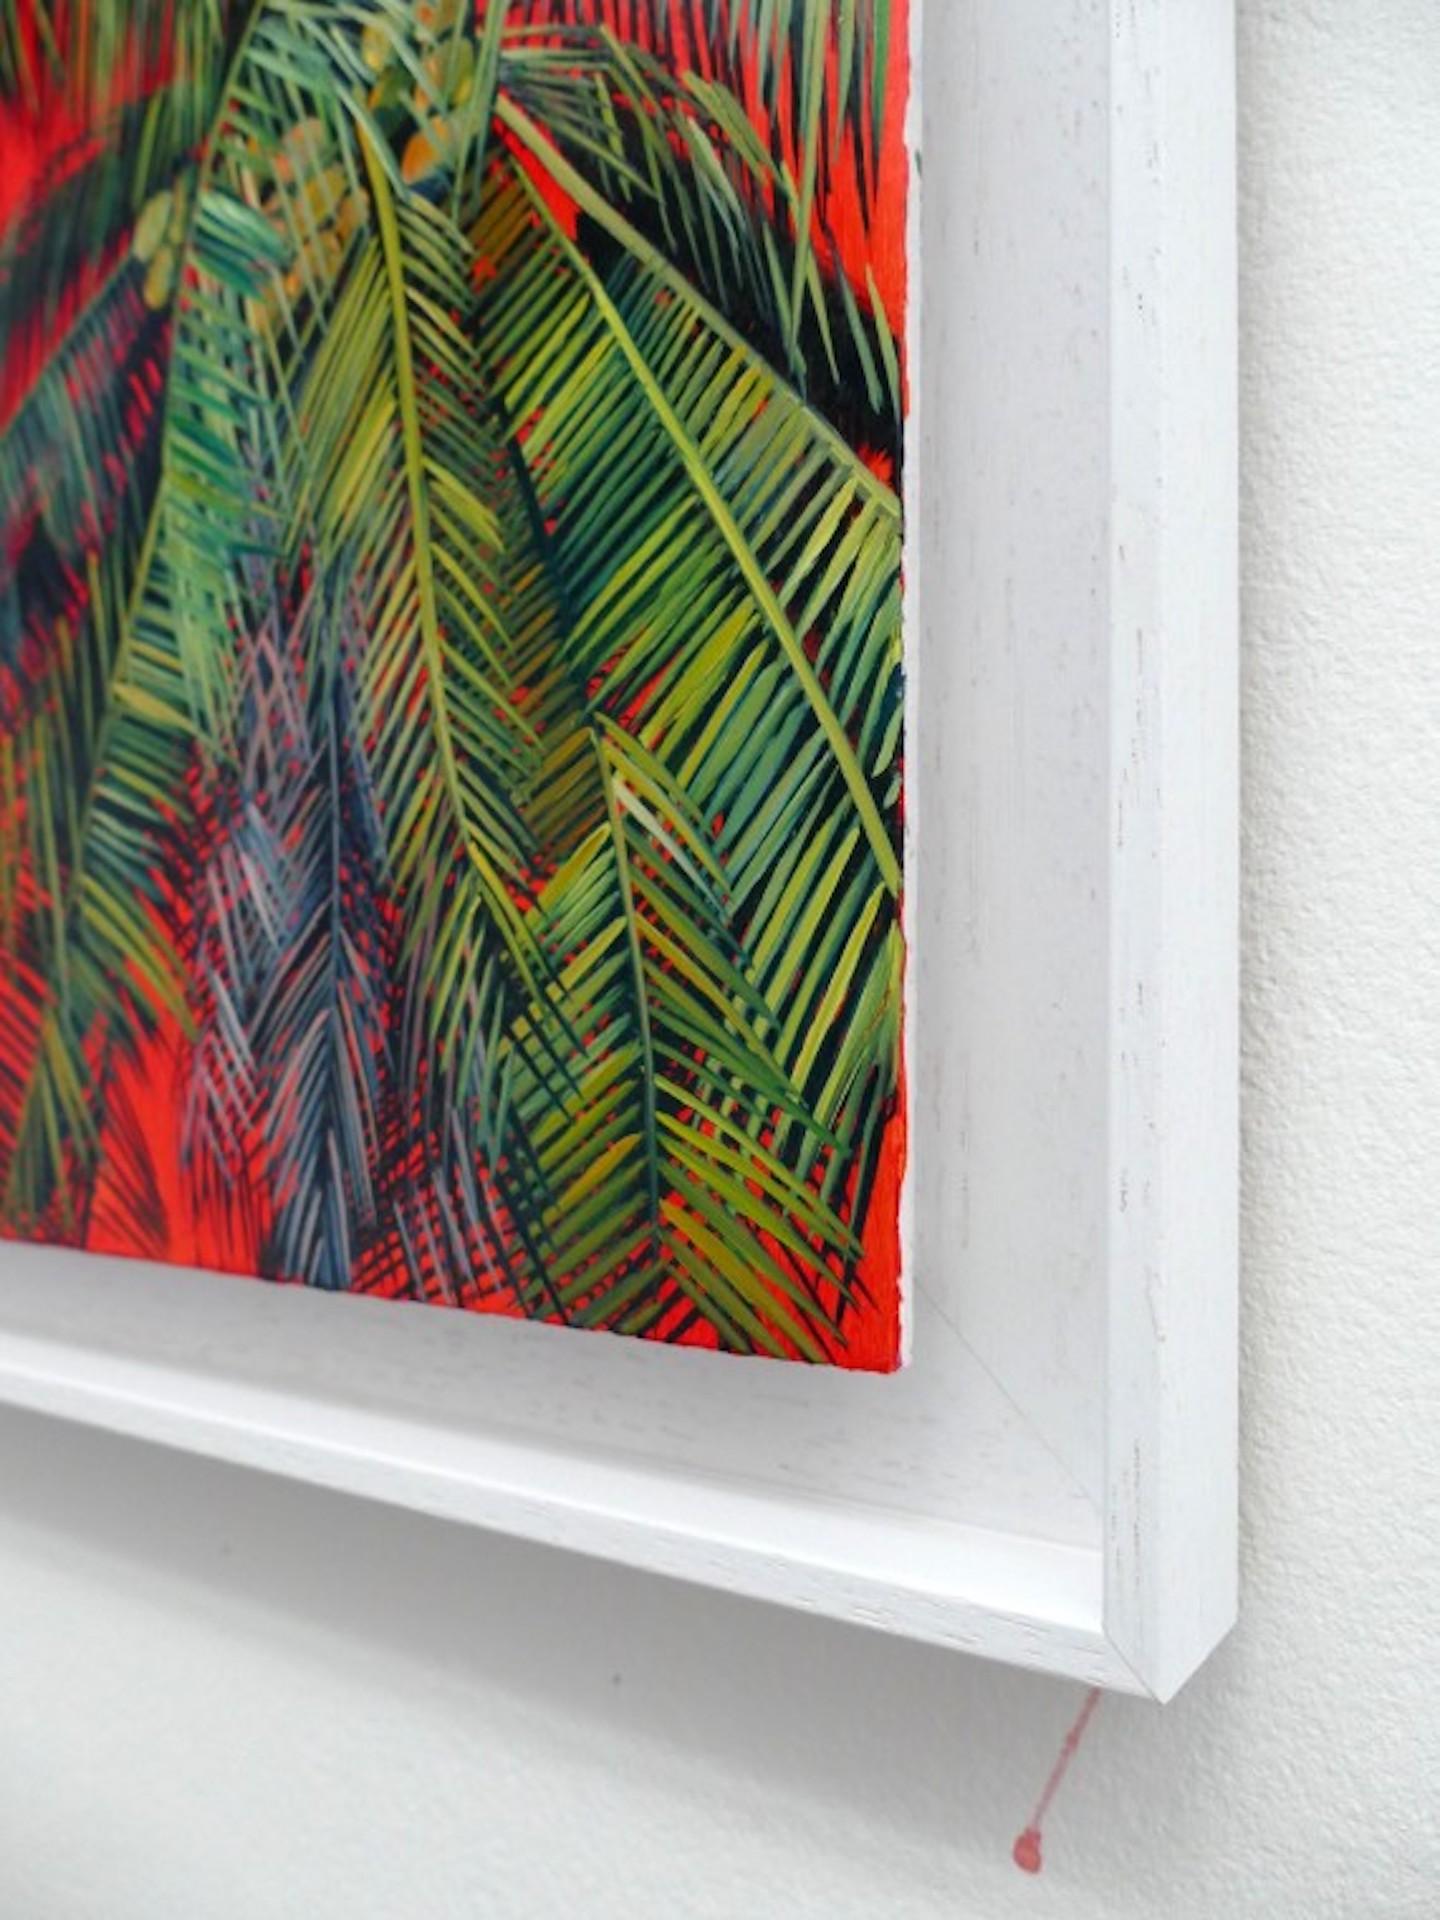 Agonda, Alanna Eakin, Original Painting, Pop Art, Tropical Artwork, Affordable For Sale 3